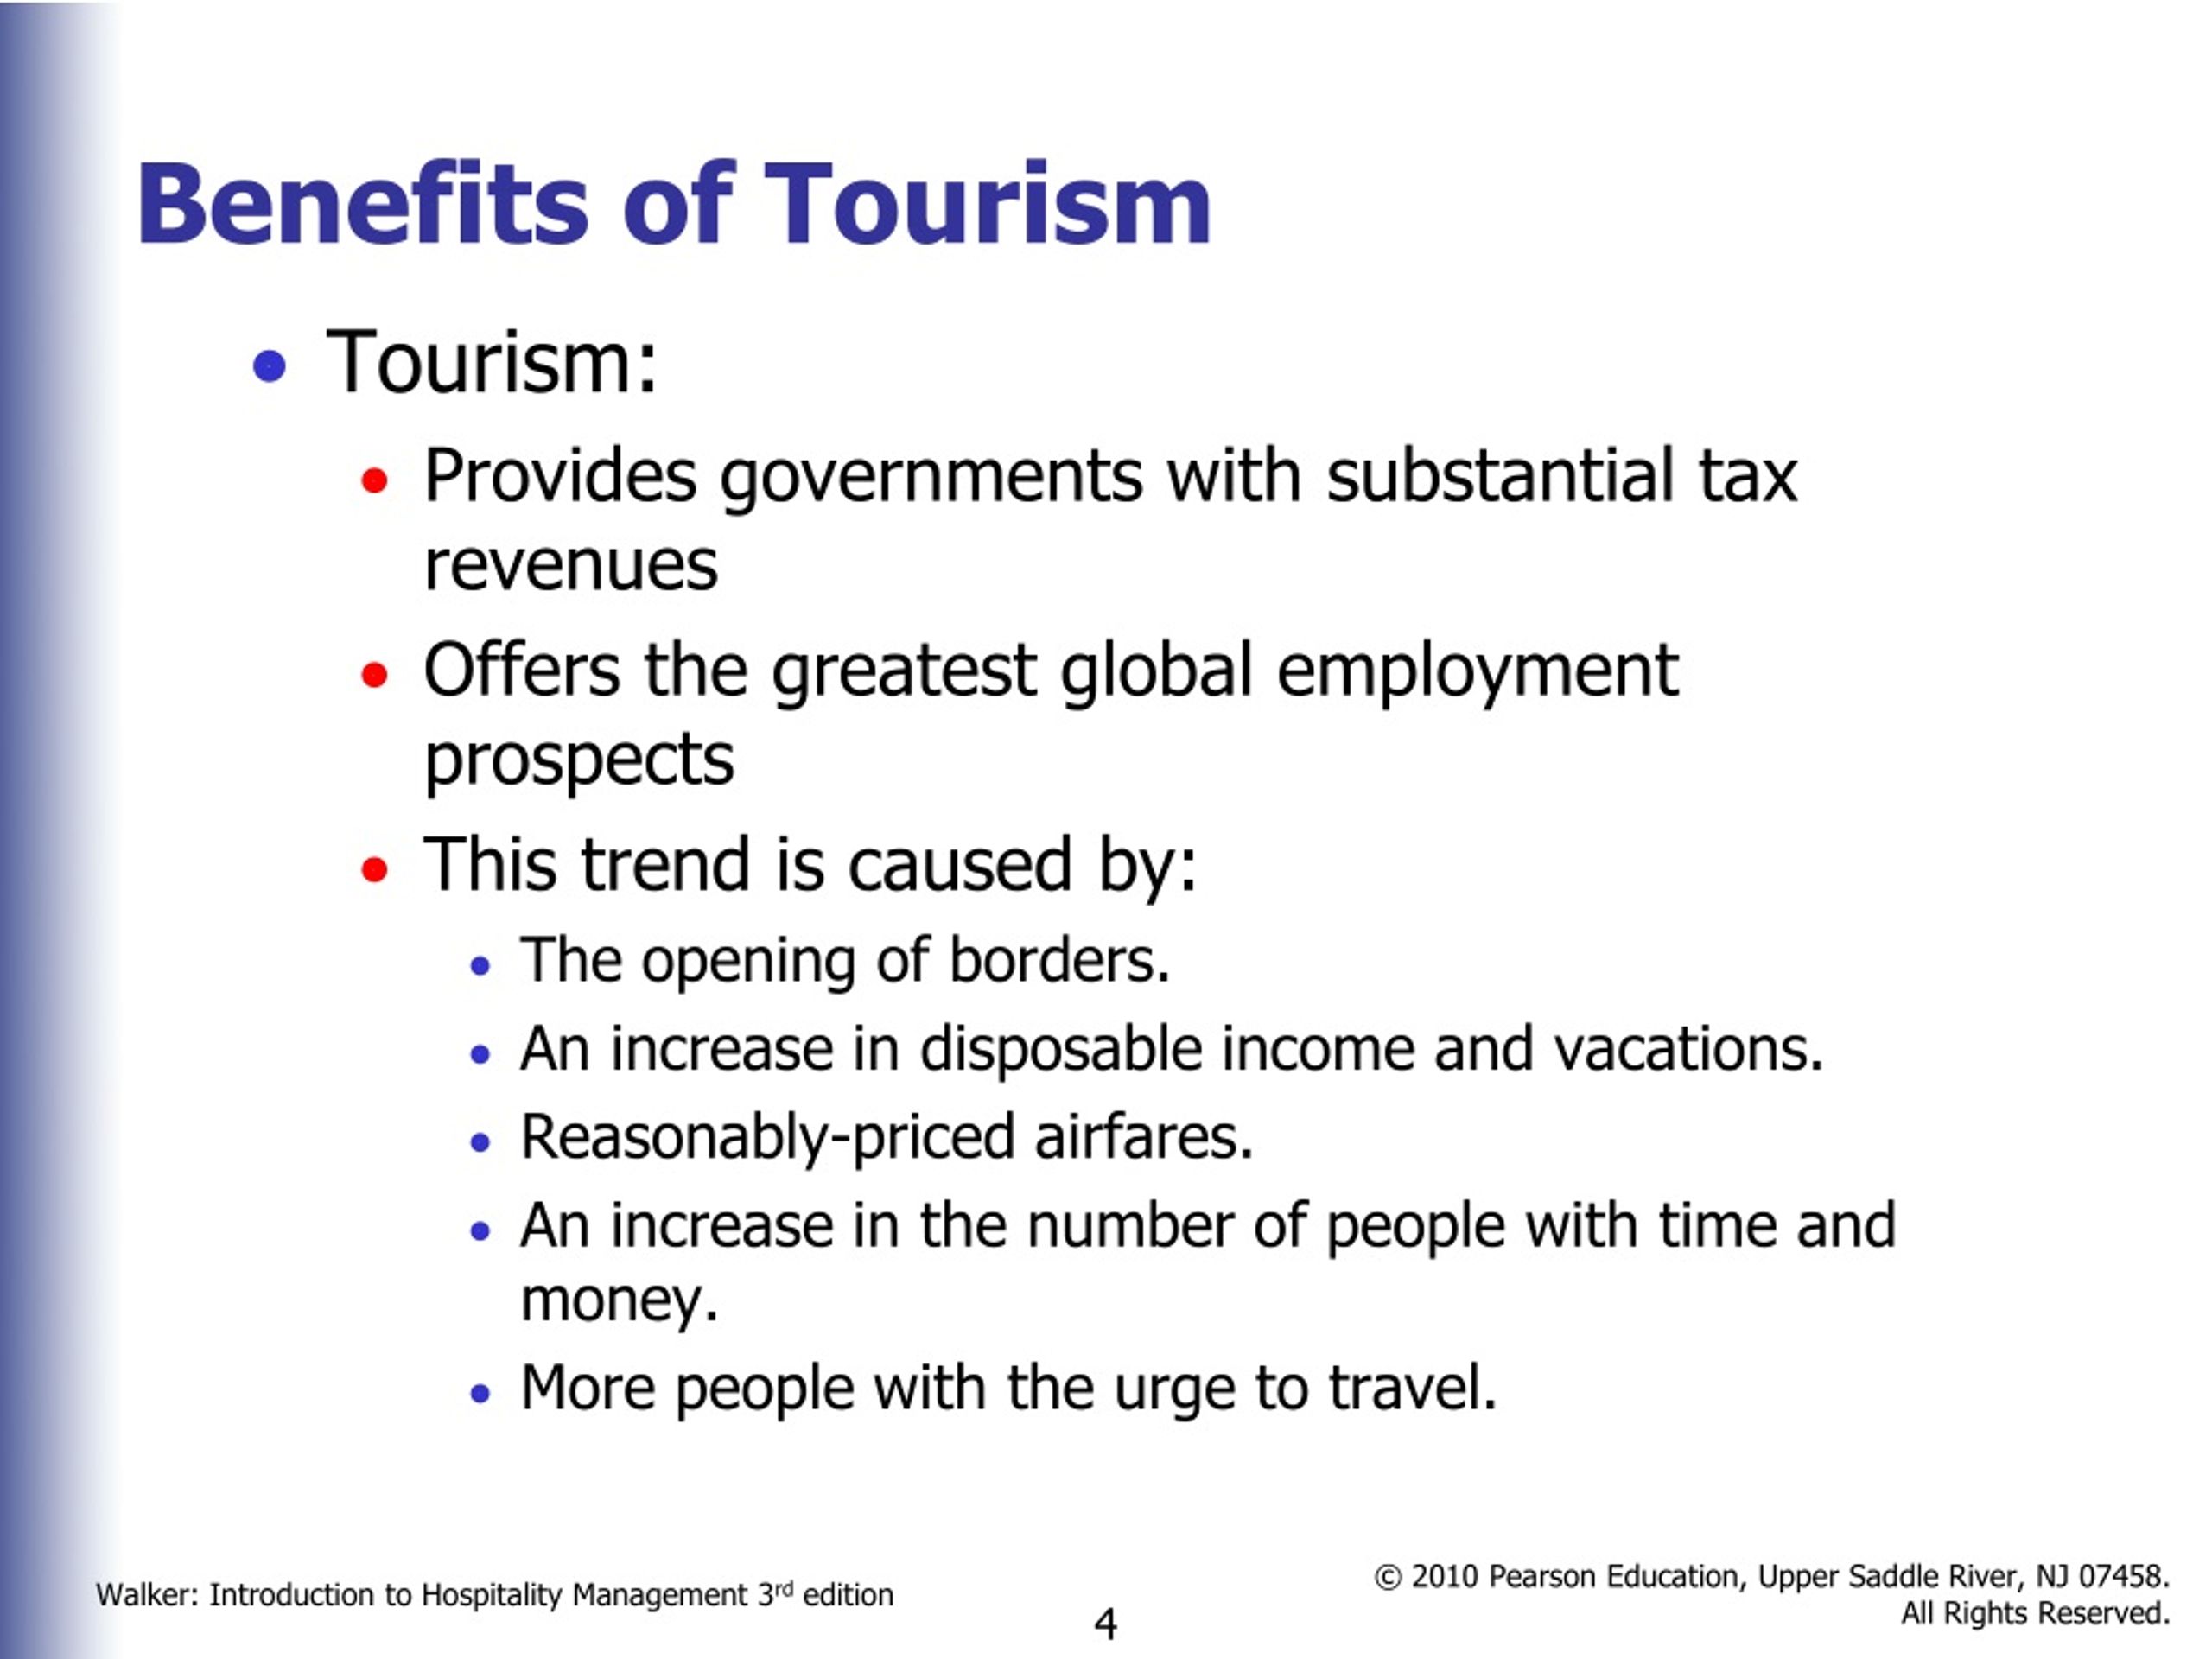 tourism benefits to individuals